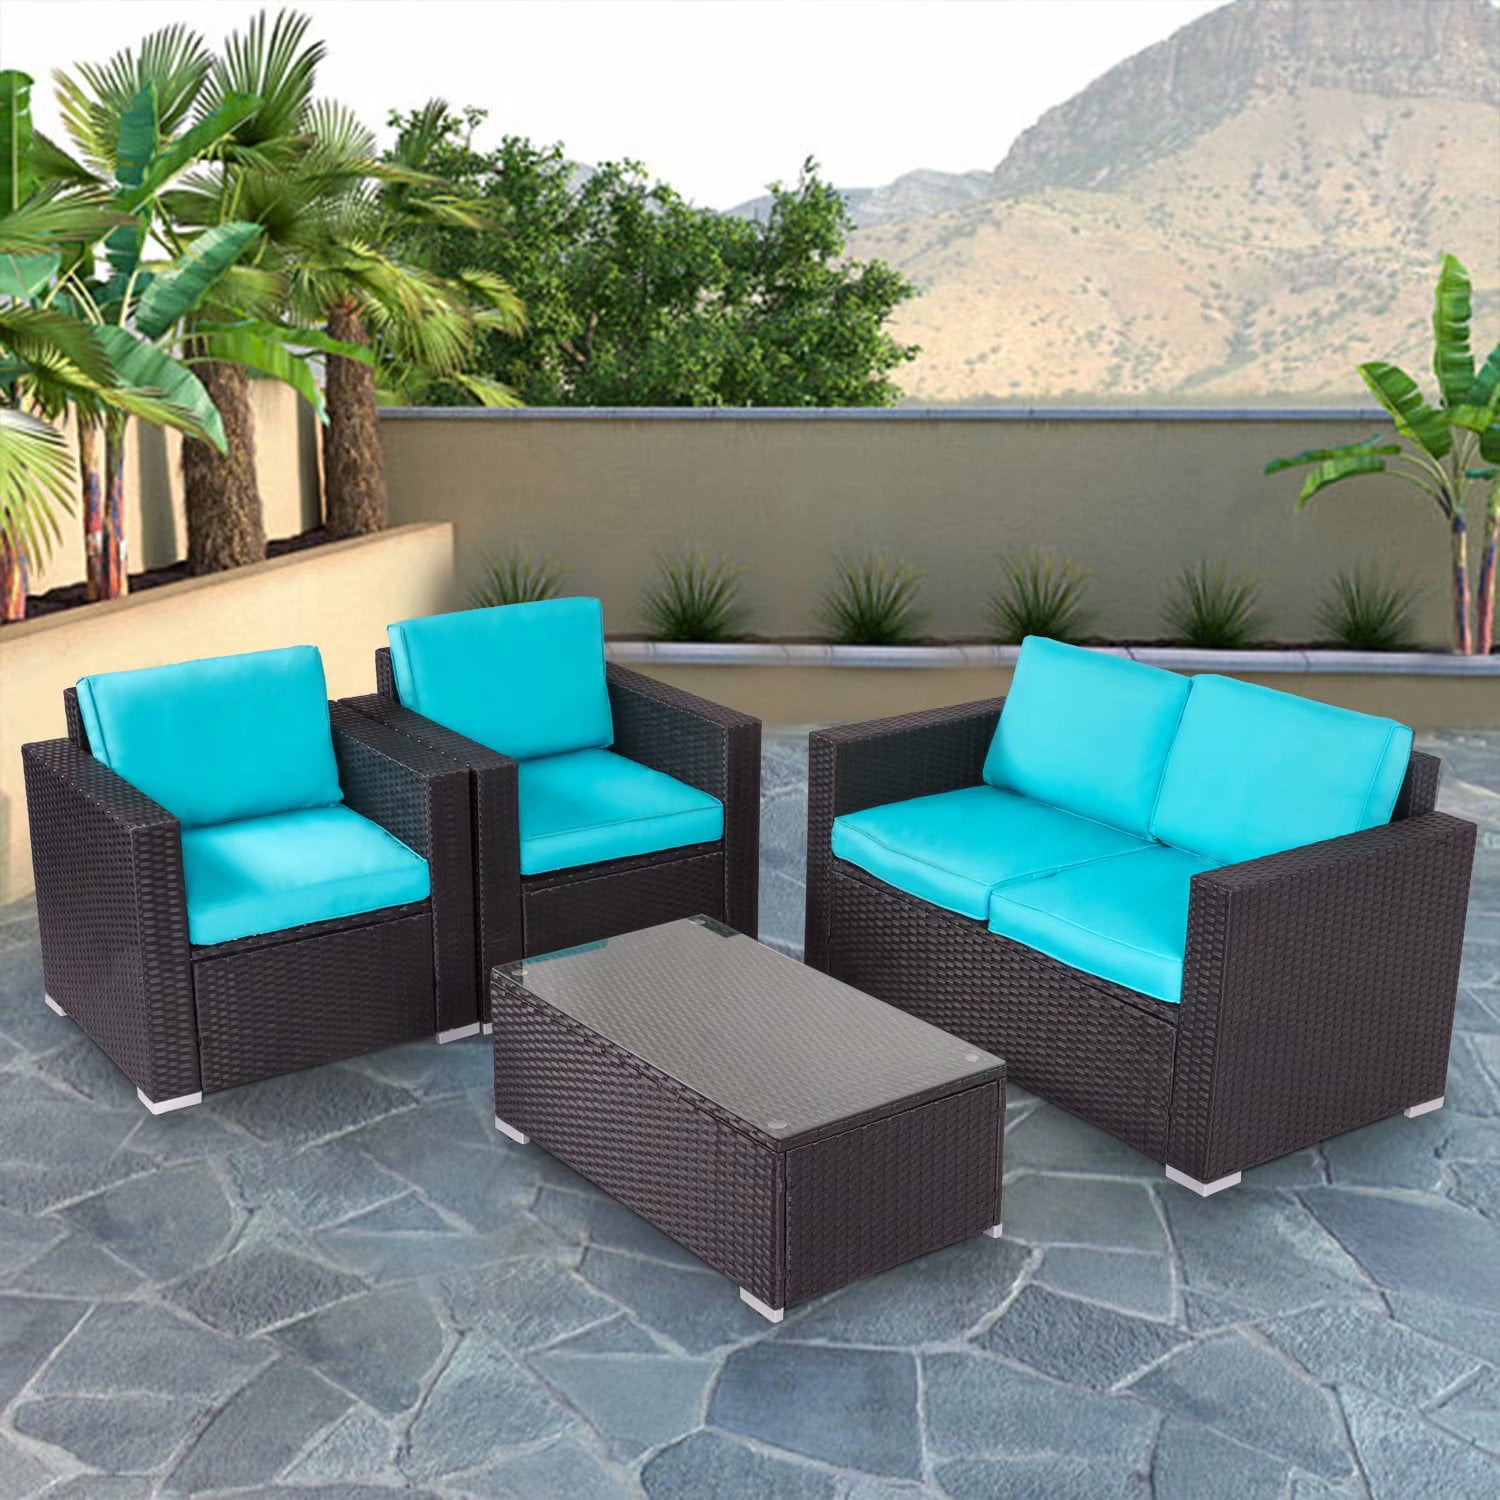 Kinbor 4pcs Outdoor Patio Furniture Pe Rattan Wicker Rattan Sofa